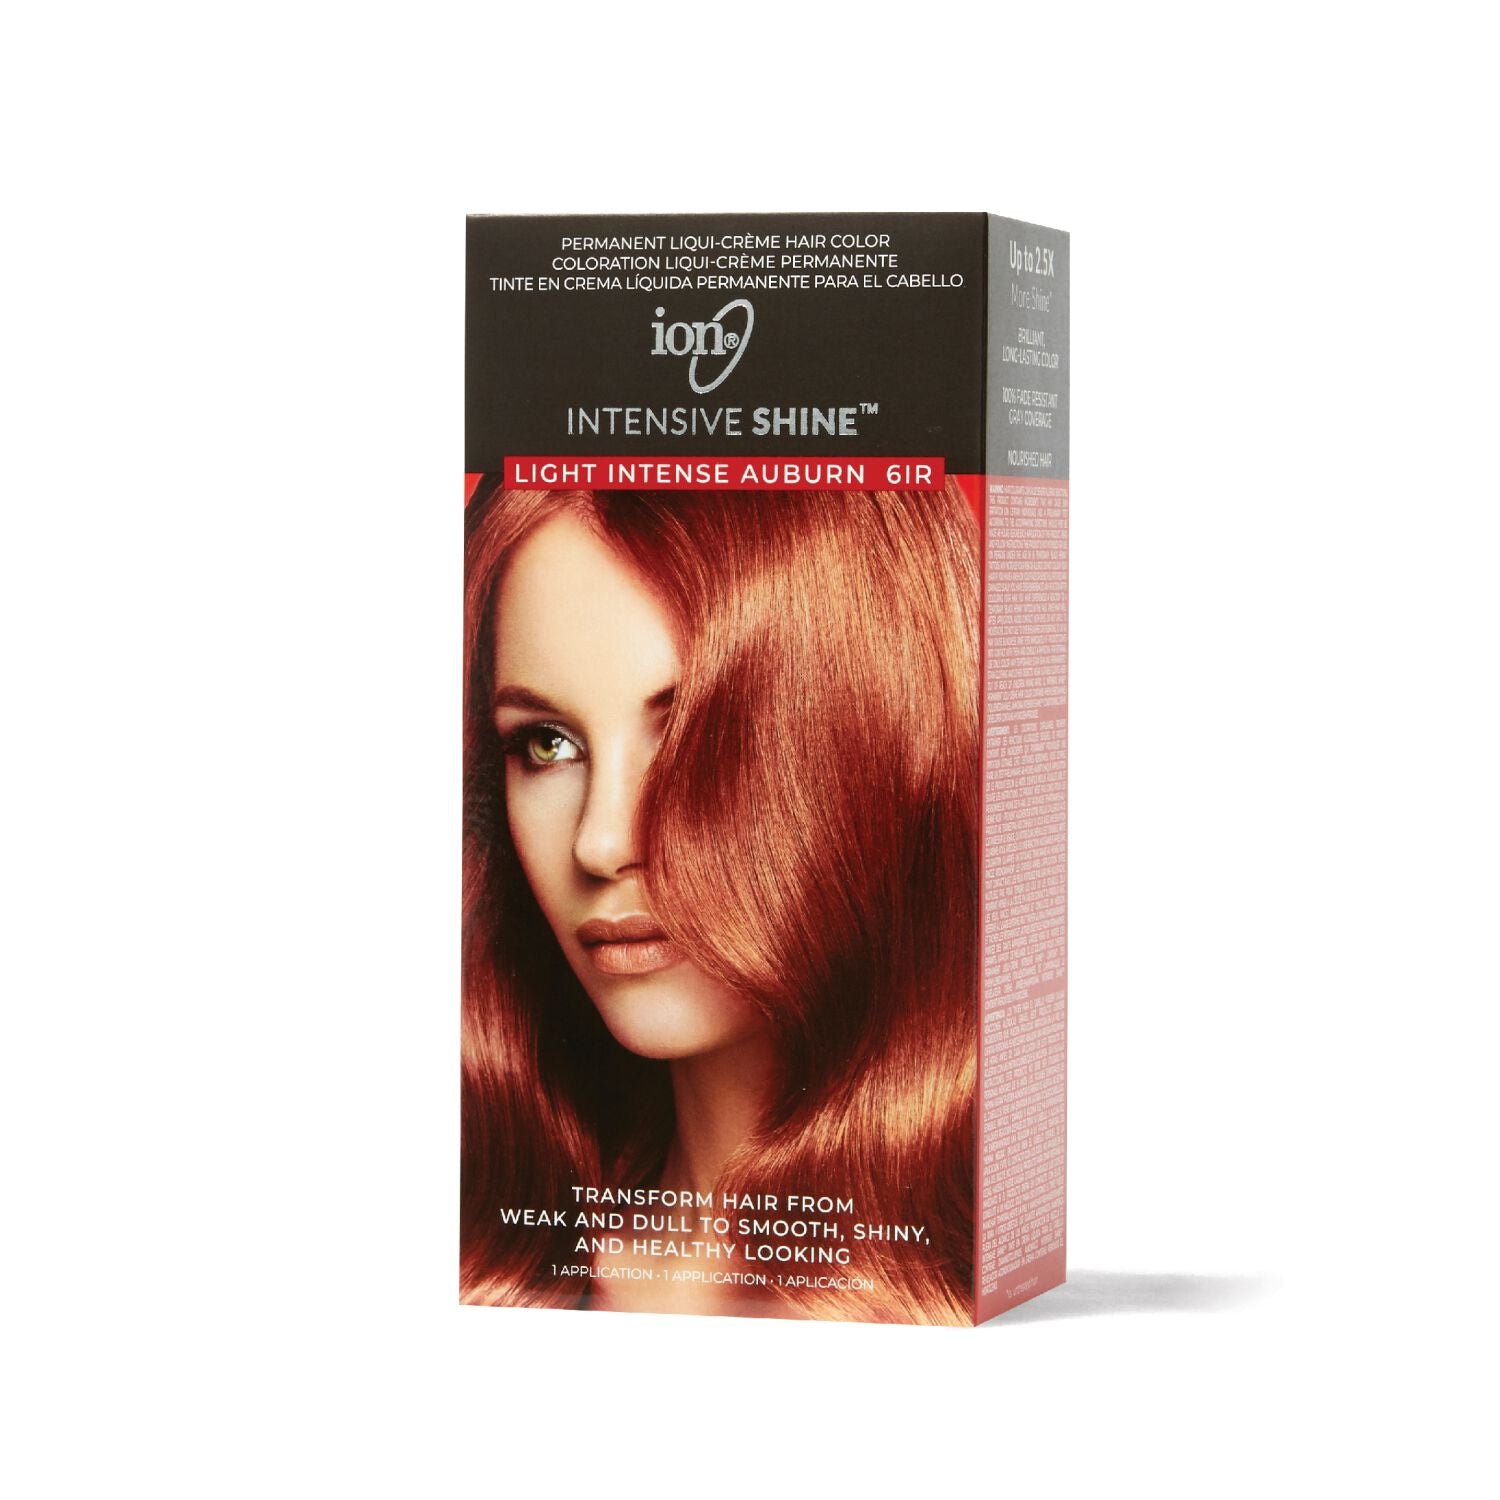 Intensive Shine  by   ion Intensive Shine Hair Color Kit Light Intense Auburn 6IR